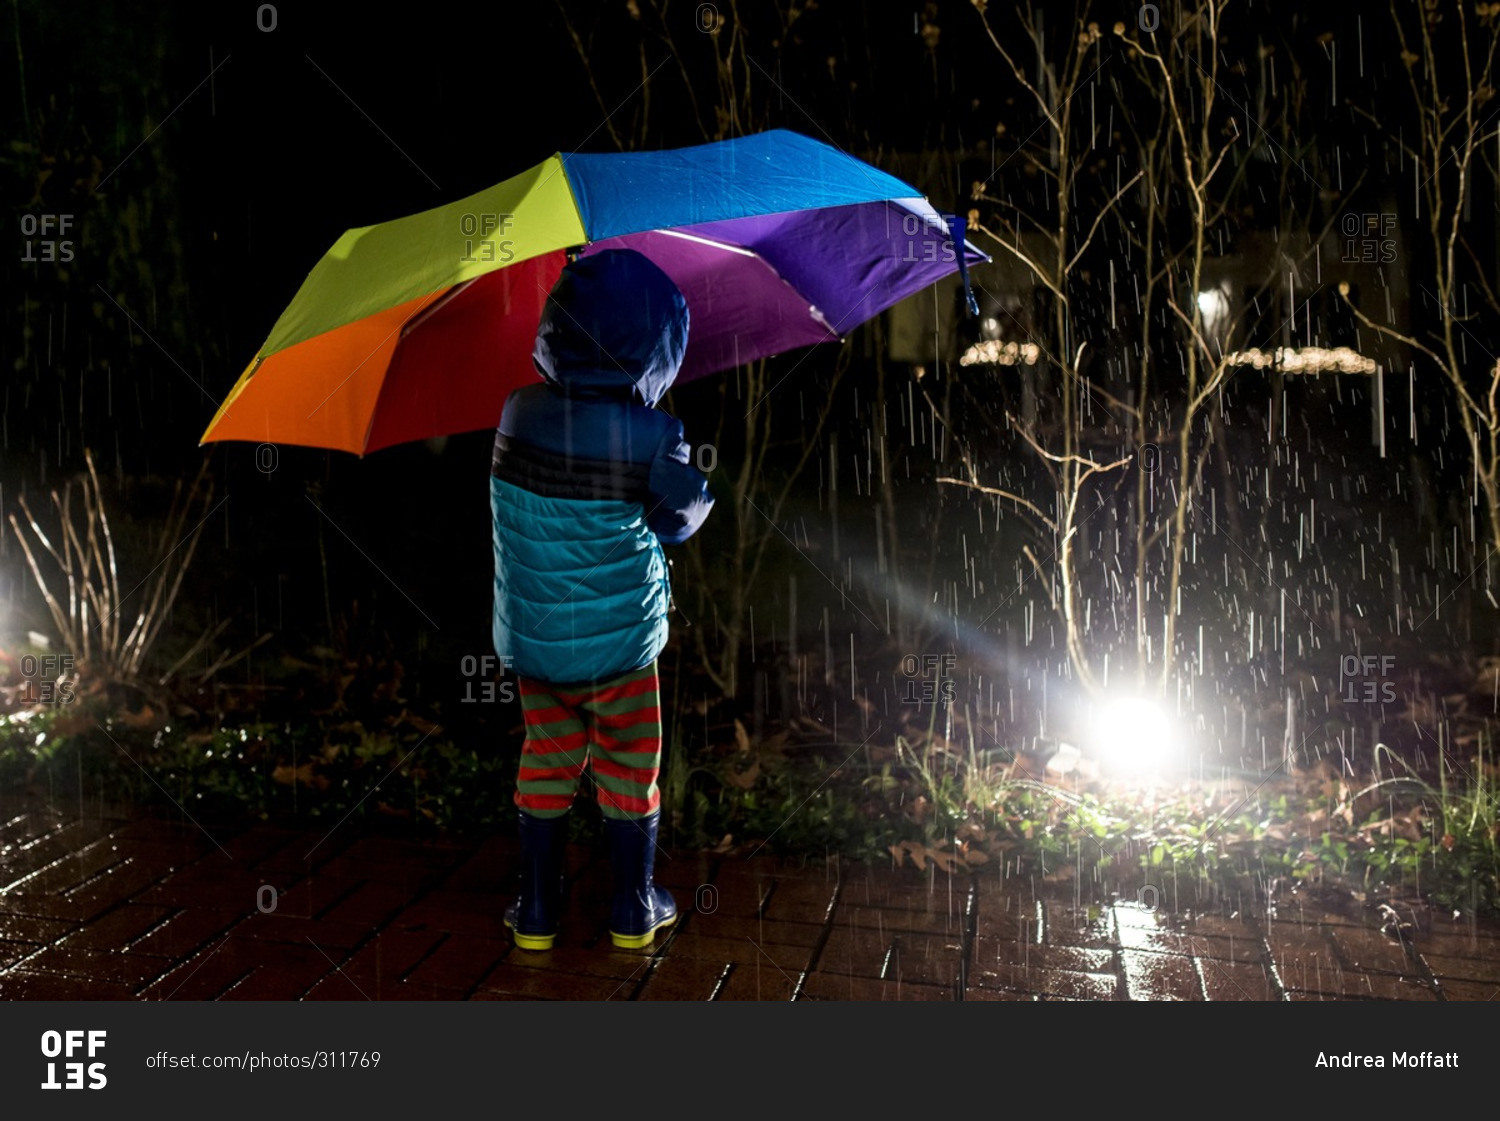 Boy with rainbow umbrella at night in rain